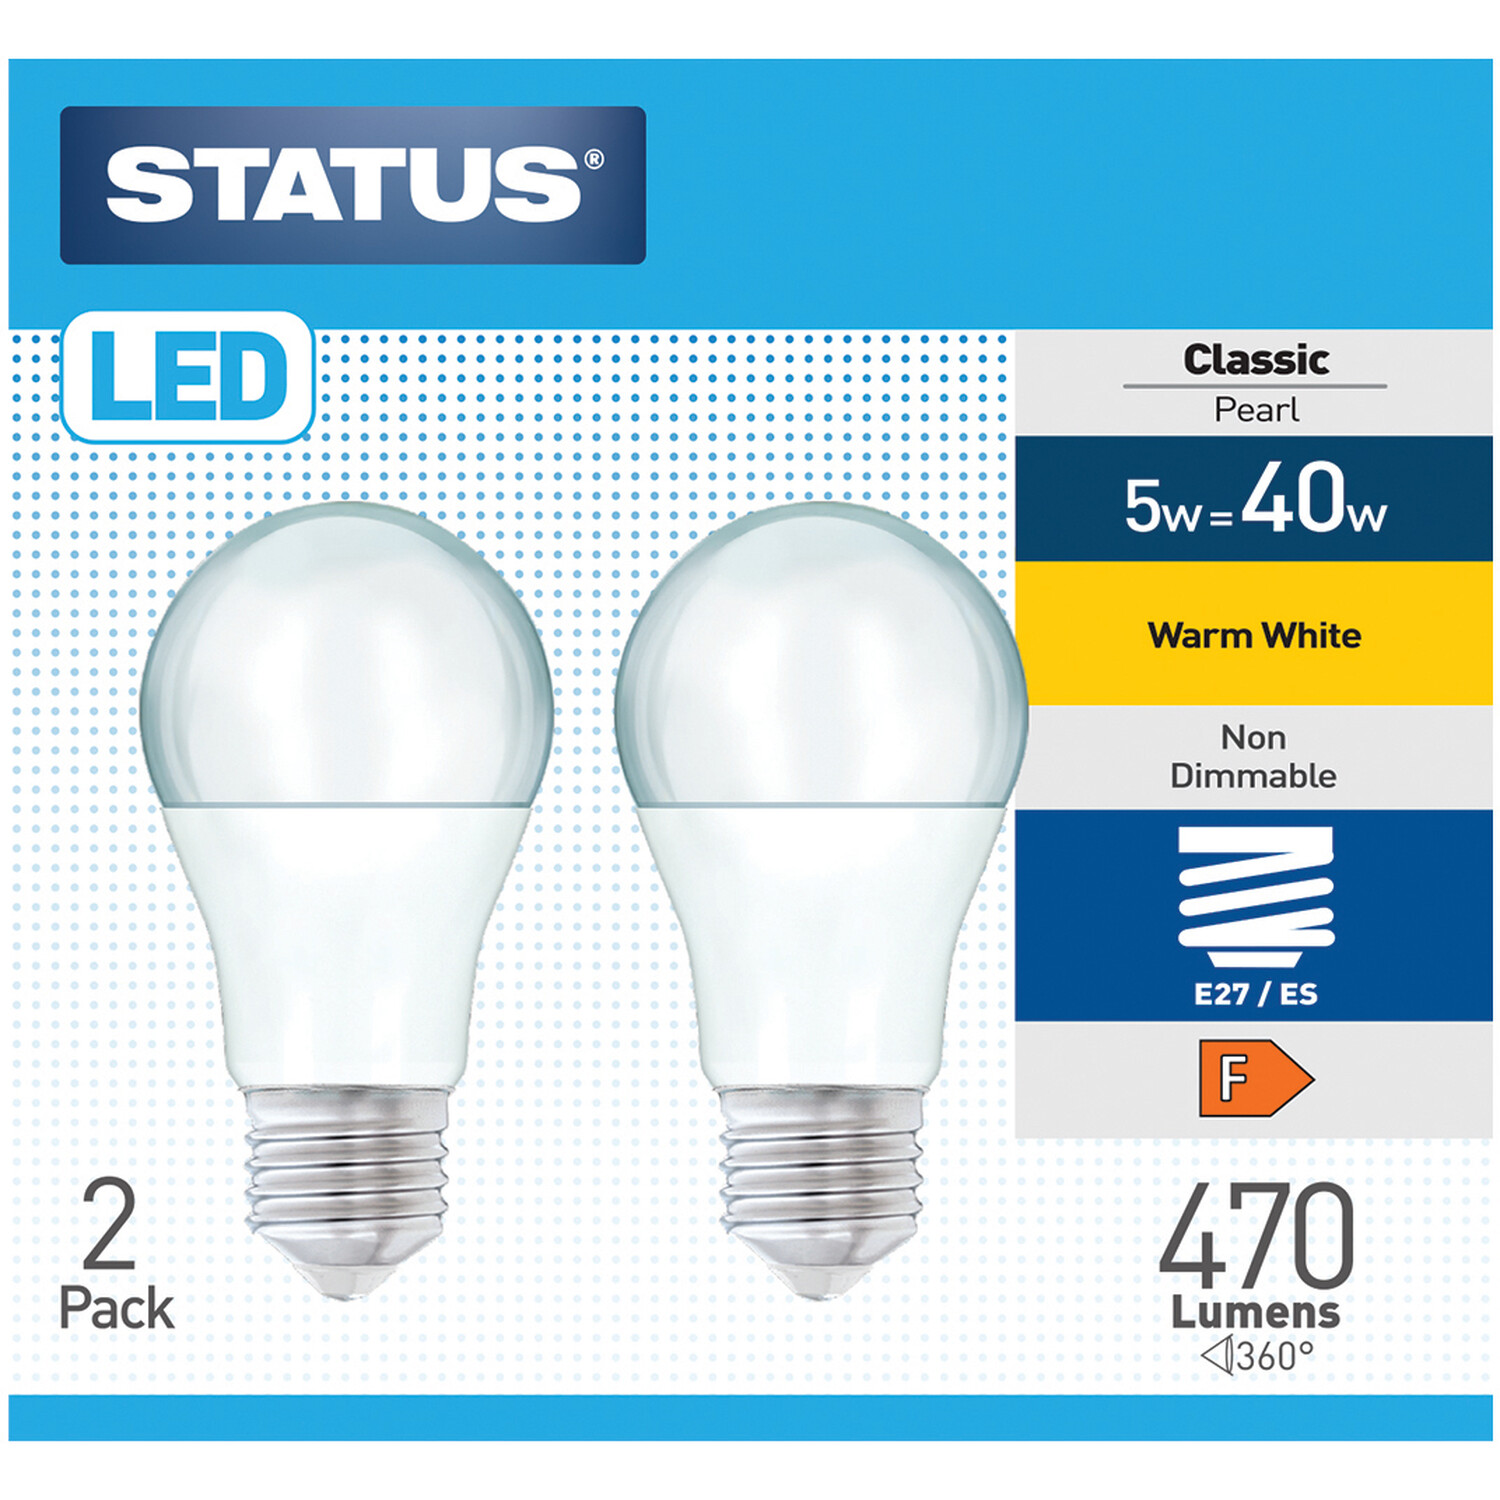 Status ES LED 5W Classic Pearl Light Bulbs 2 Pack Image 1